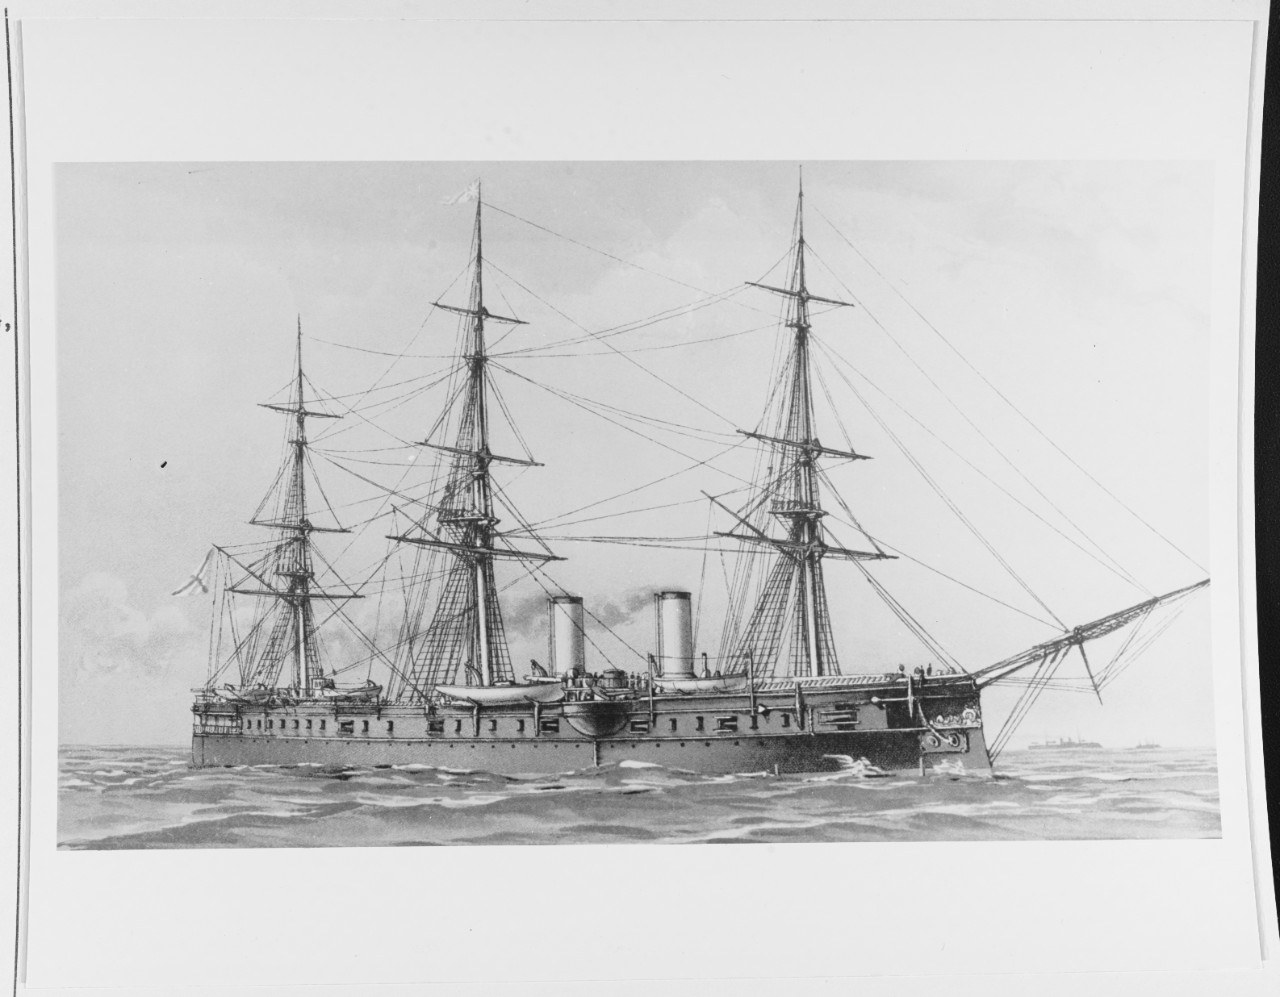 DMITRI DONSKOI (Russian cruiser, 1883)